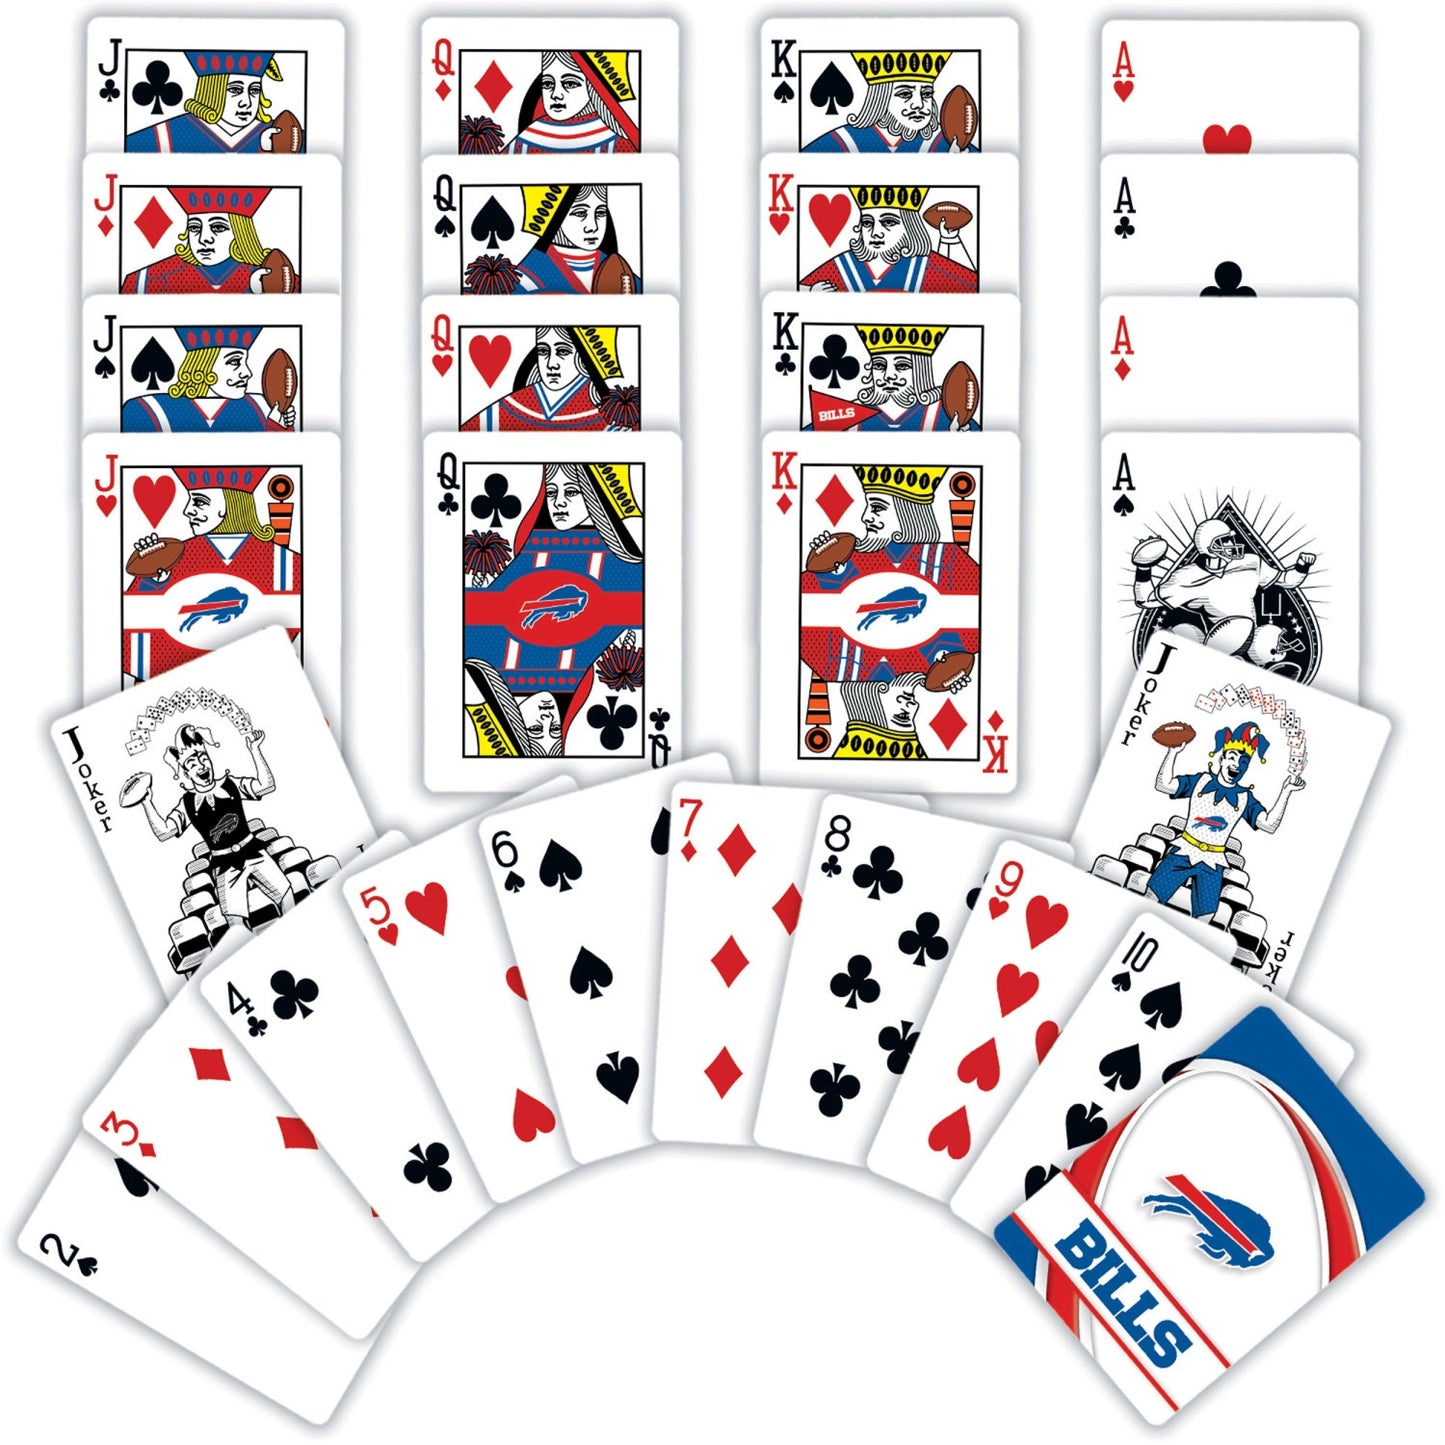 Buffalo Bills Playing Cards - Let's Go Buffalo!